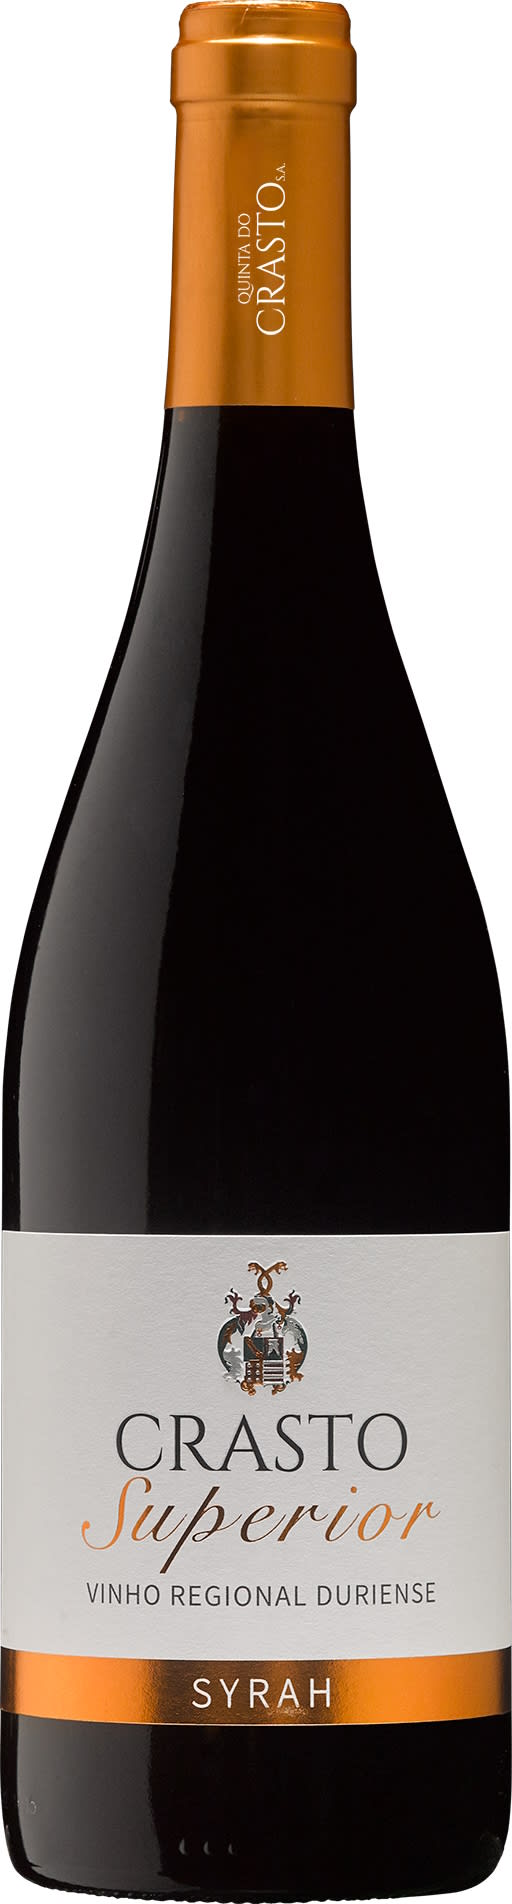 Quinta Do Crasto Superior Syrah 2021 75cl - Buy Quinta Do Crasto Wines from GREAT WINES DIRECT wine shop